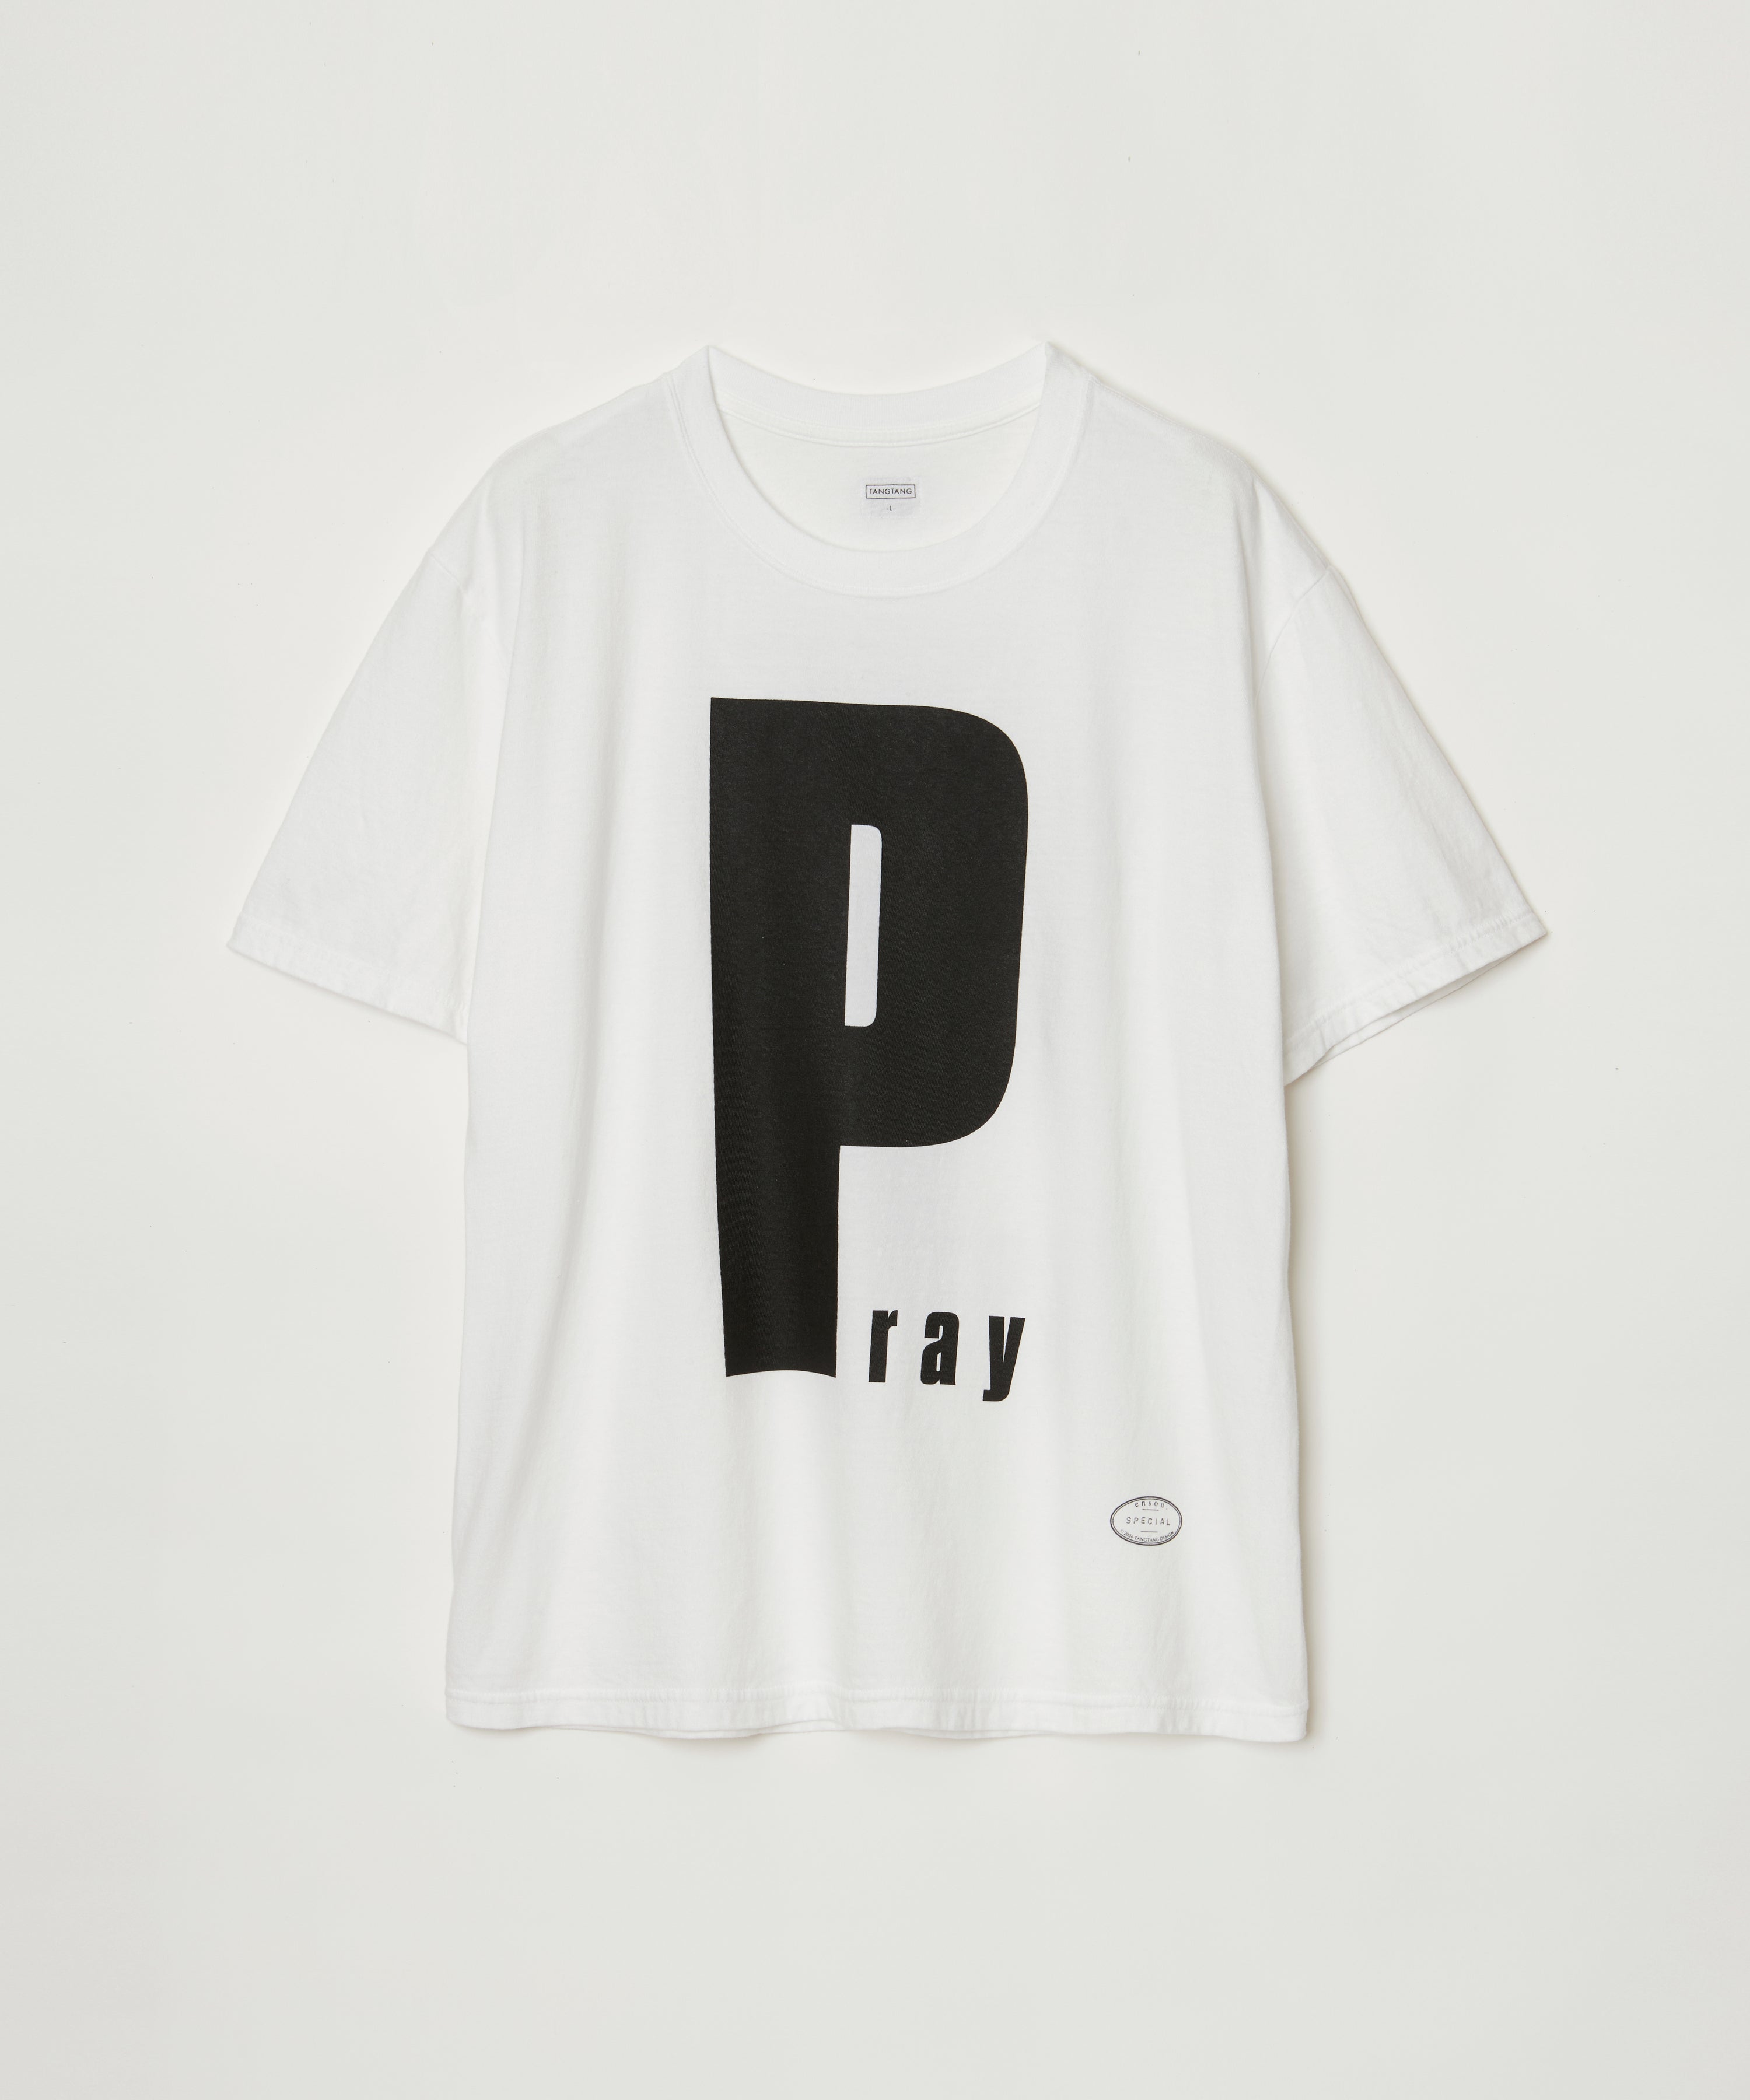 PRAY T-shirt 02 (White)